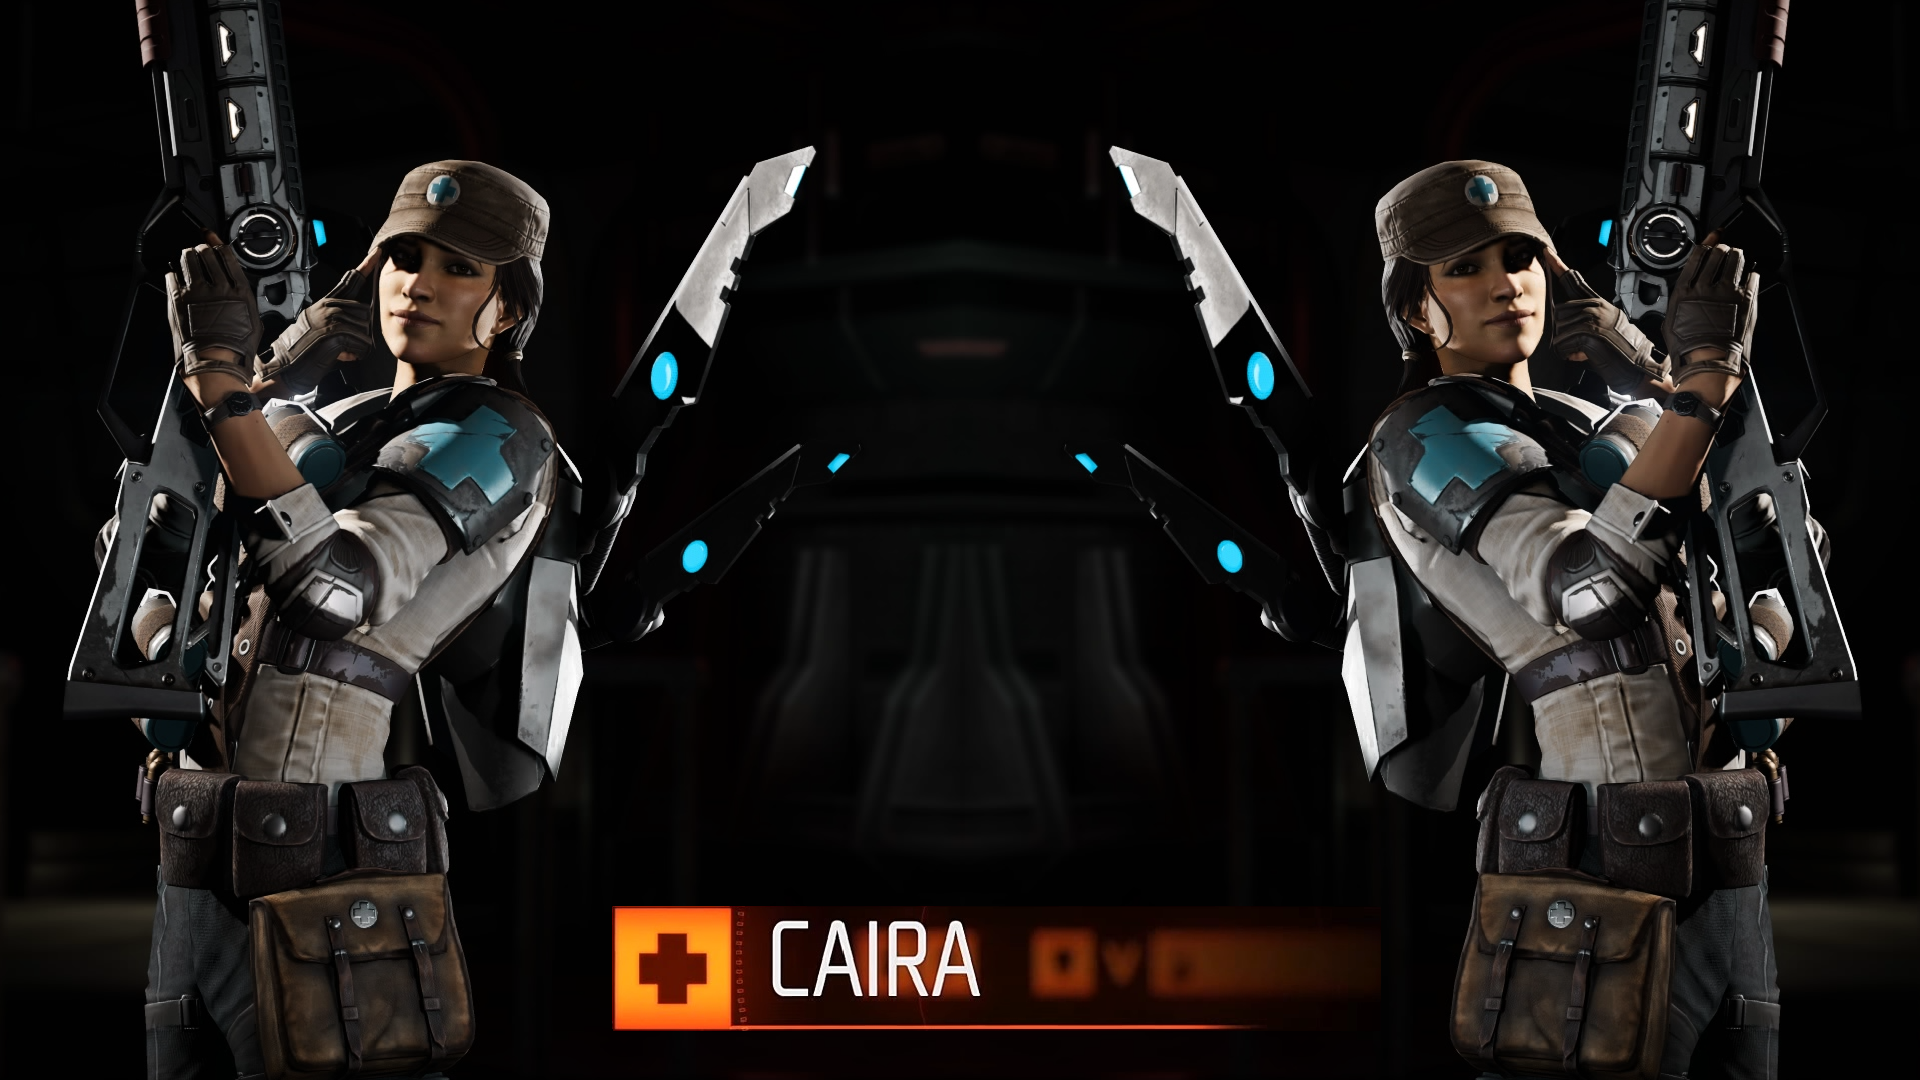 Evolve Caira Wallpaper 1080p By Idarkstalker